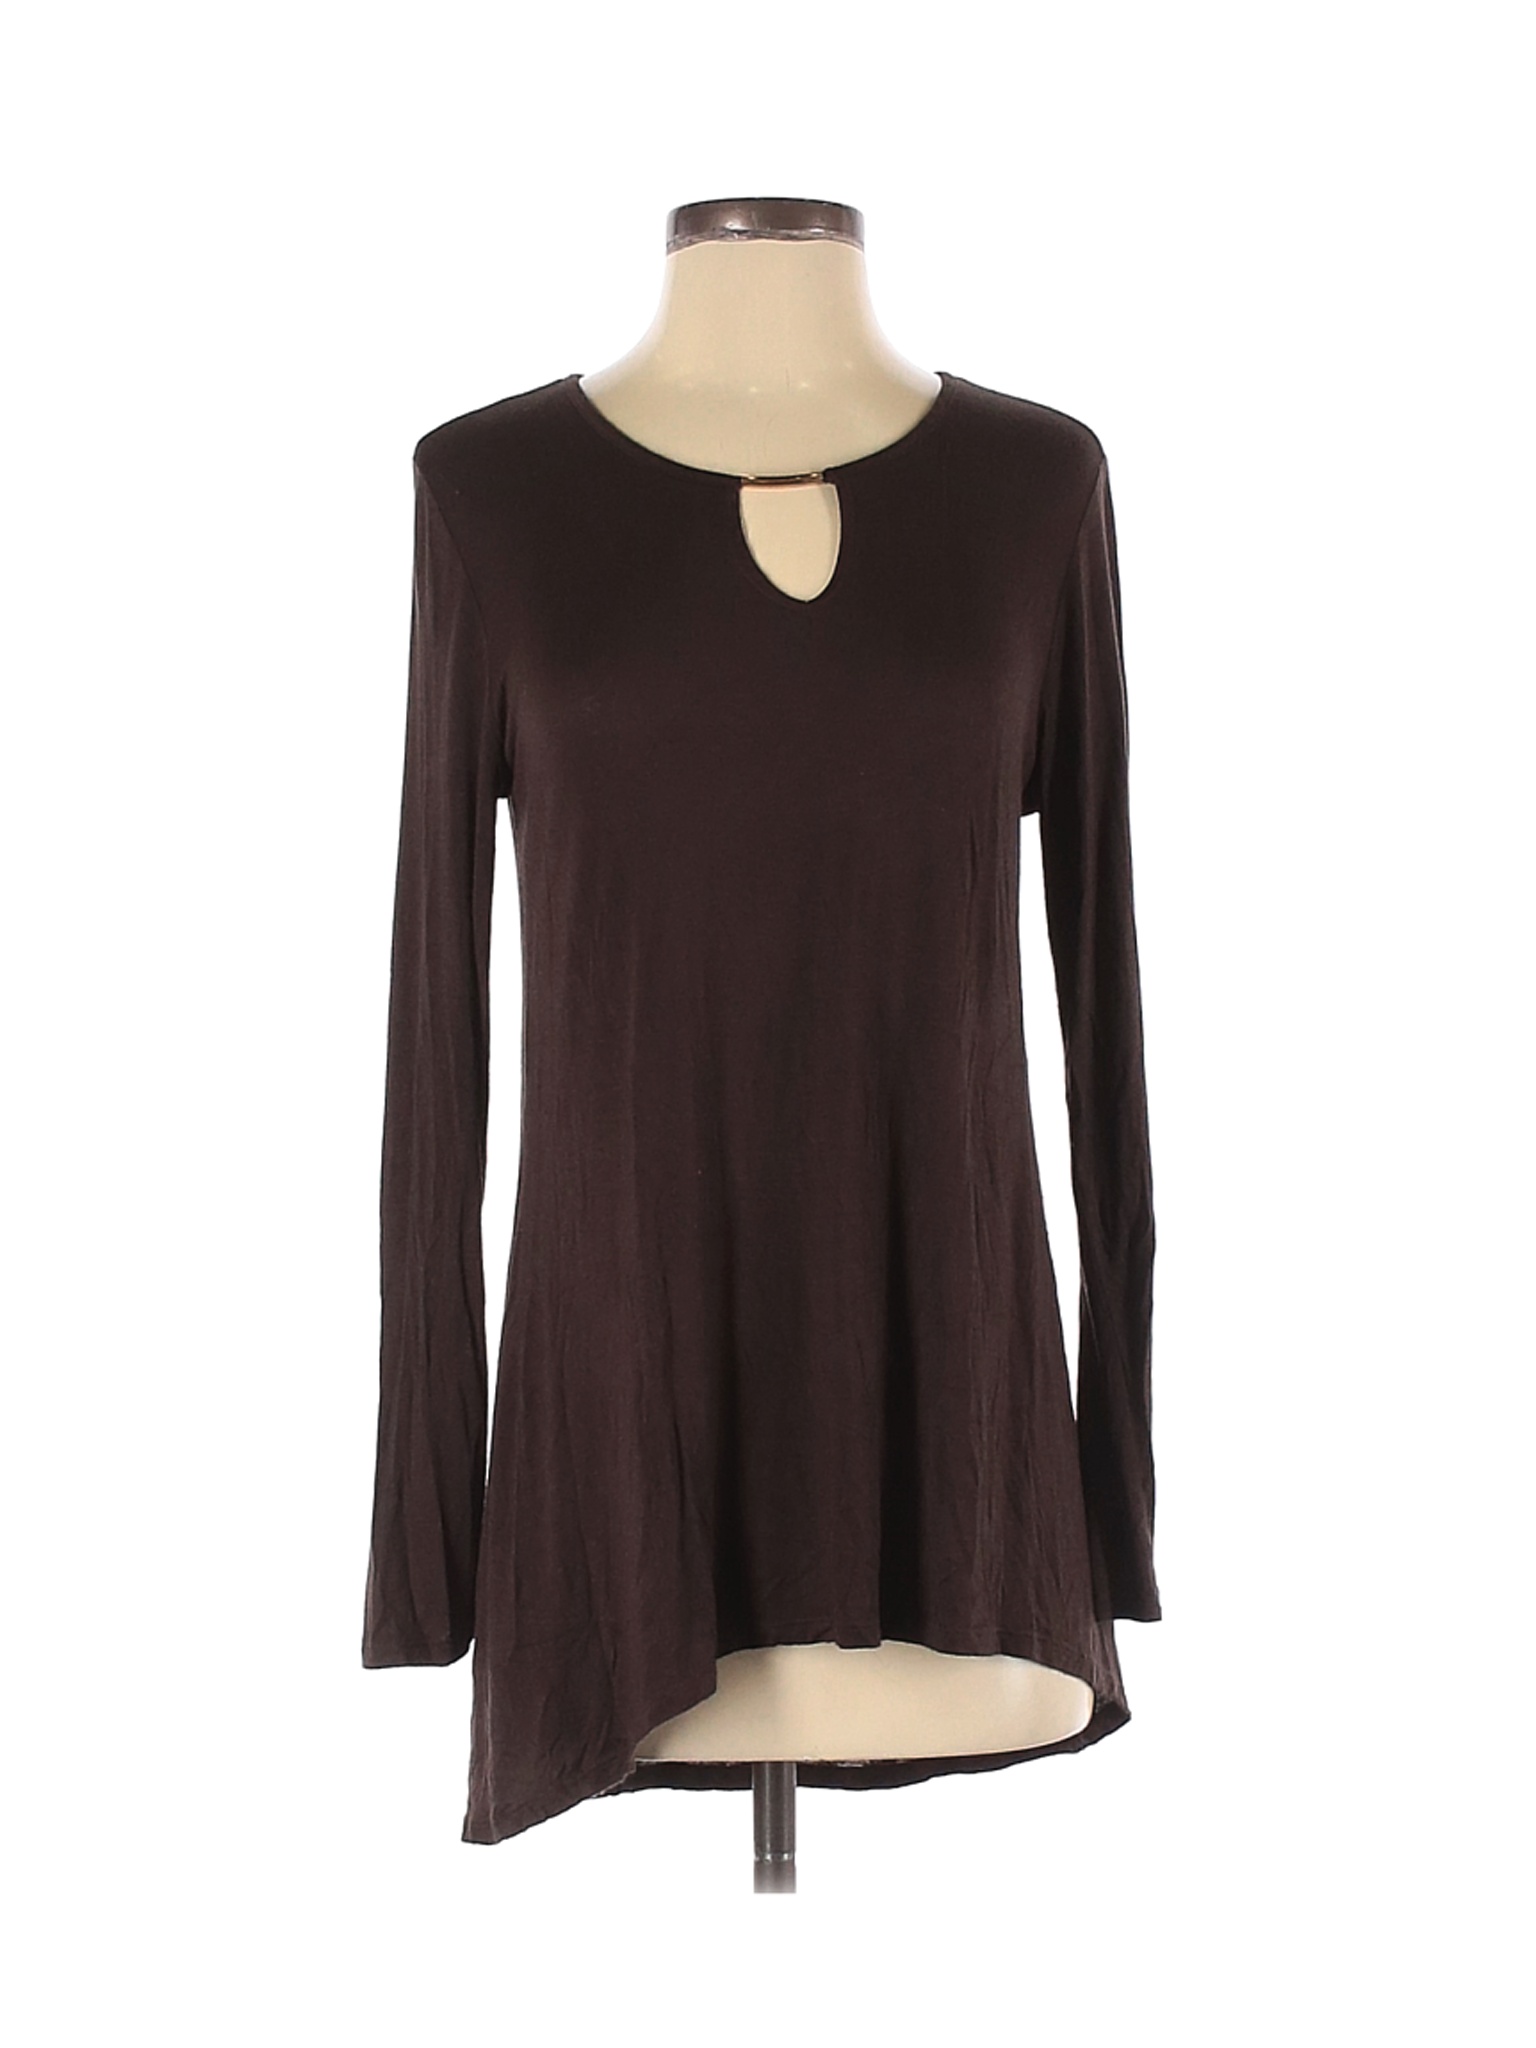 Ava James Women Brown Long Sleeve Top S | eBay